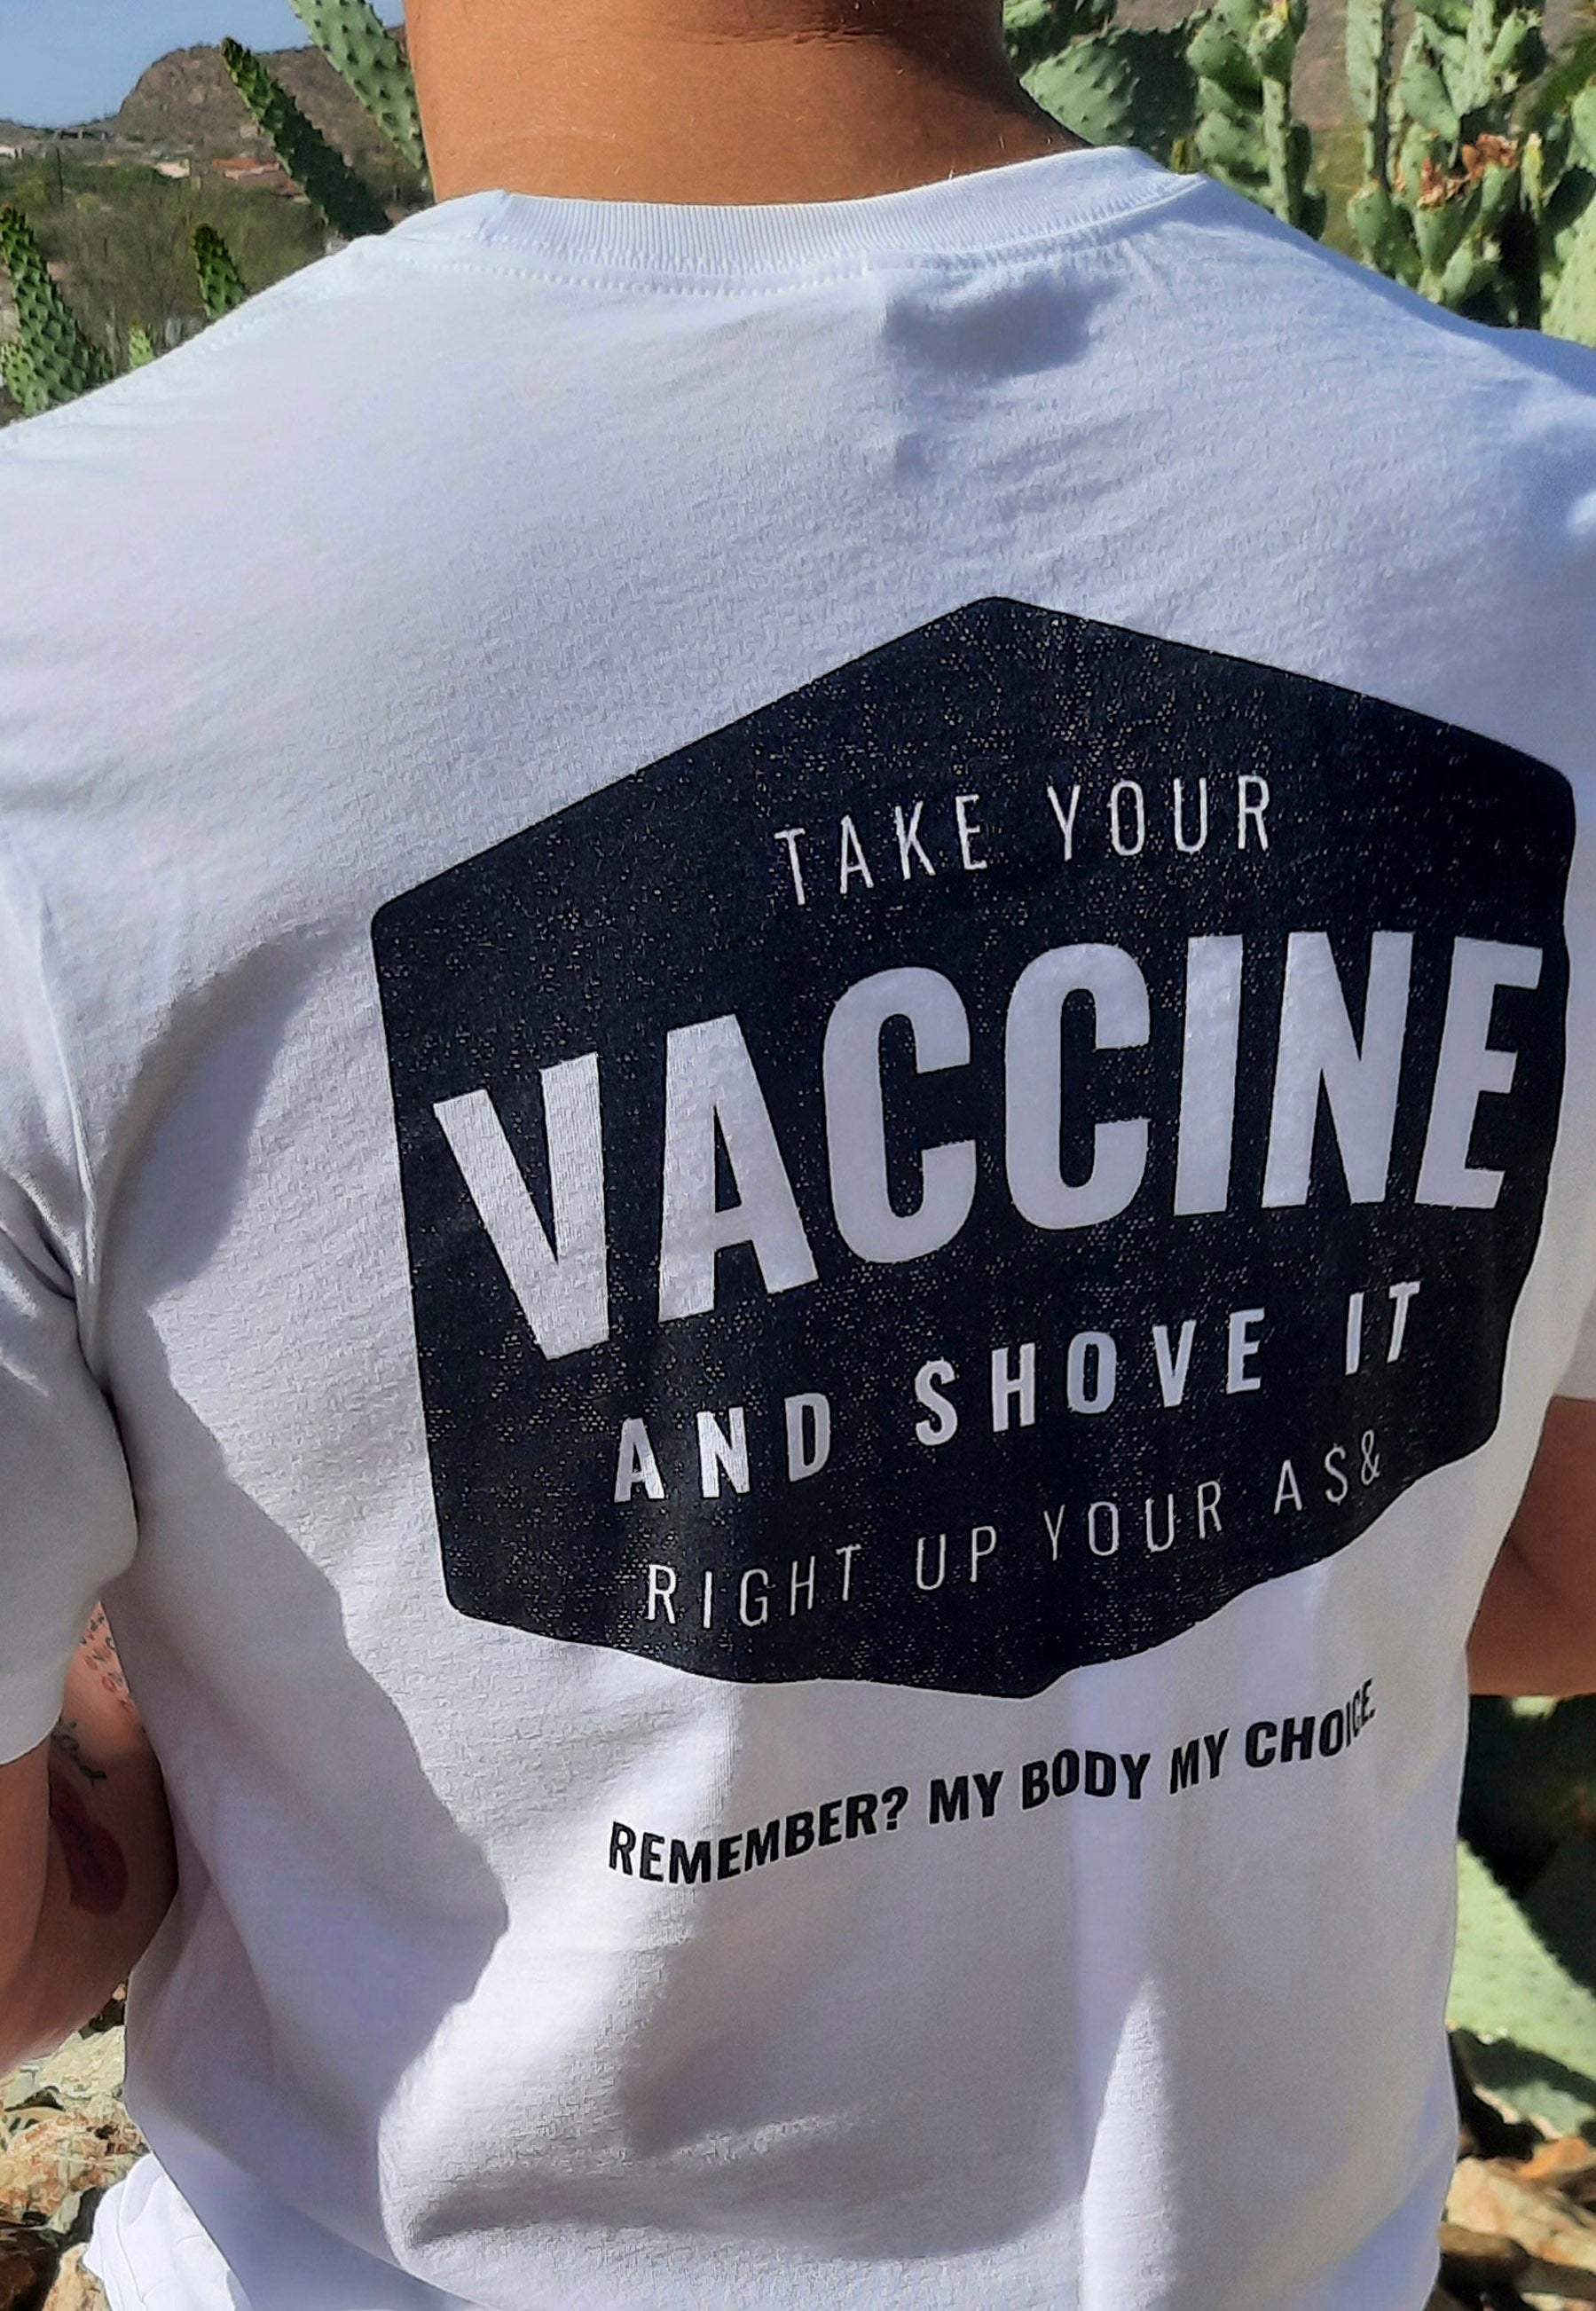 model wearing anti vaccine t-shirt